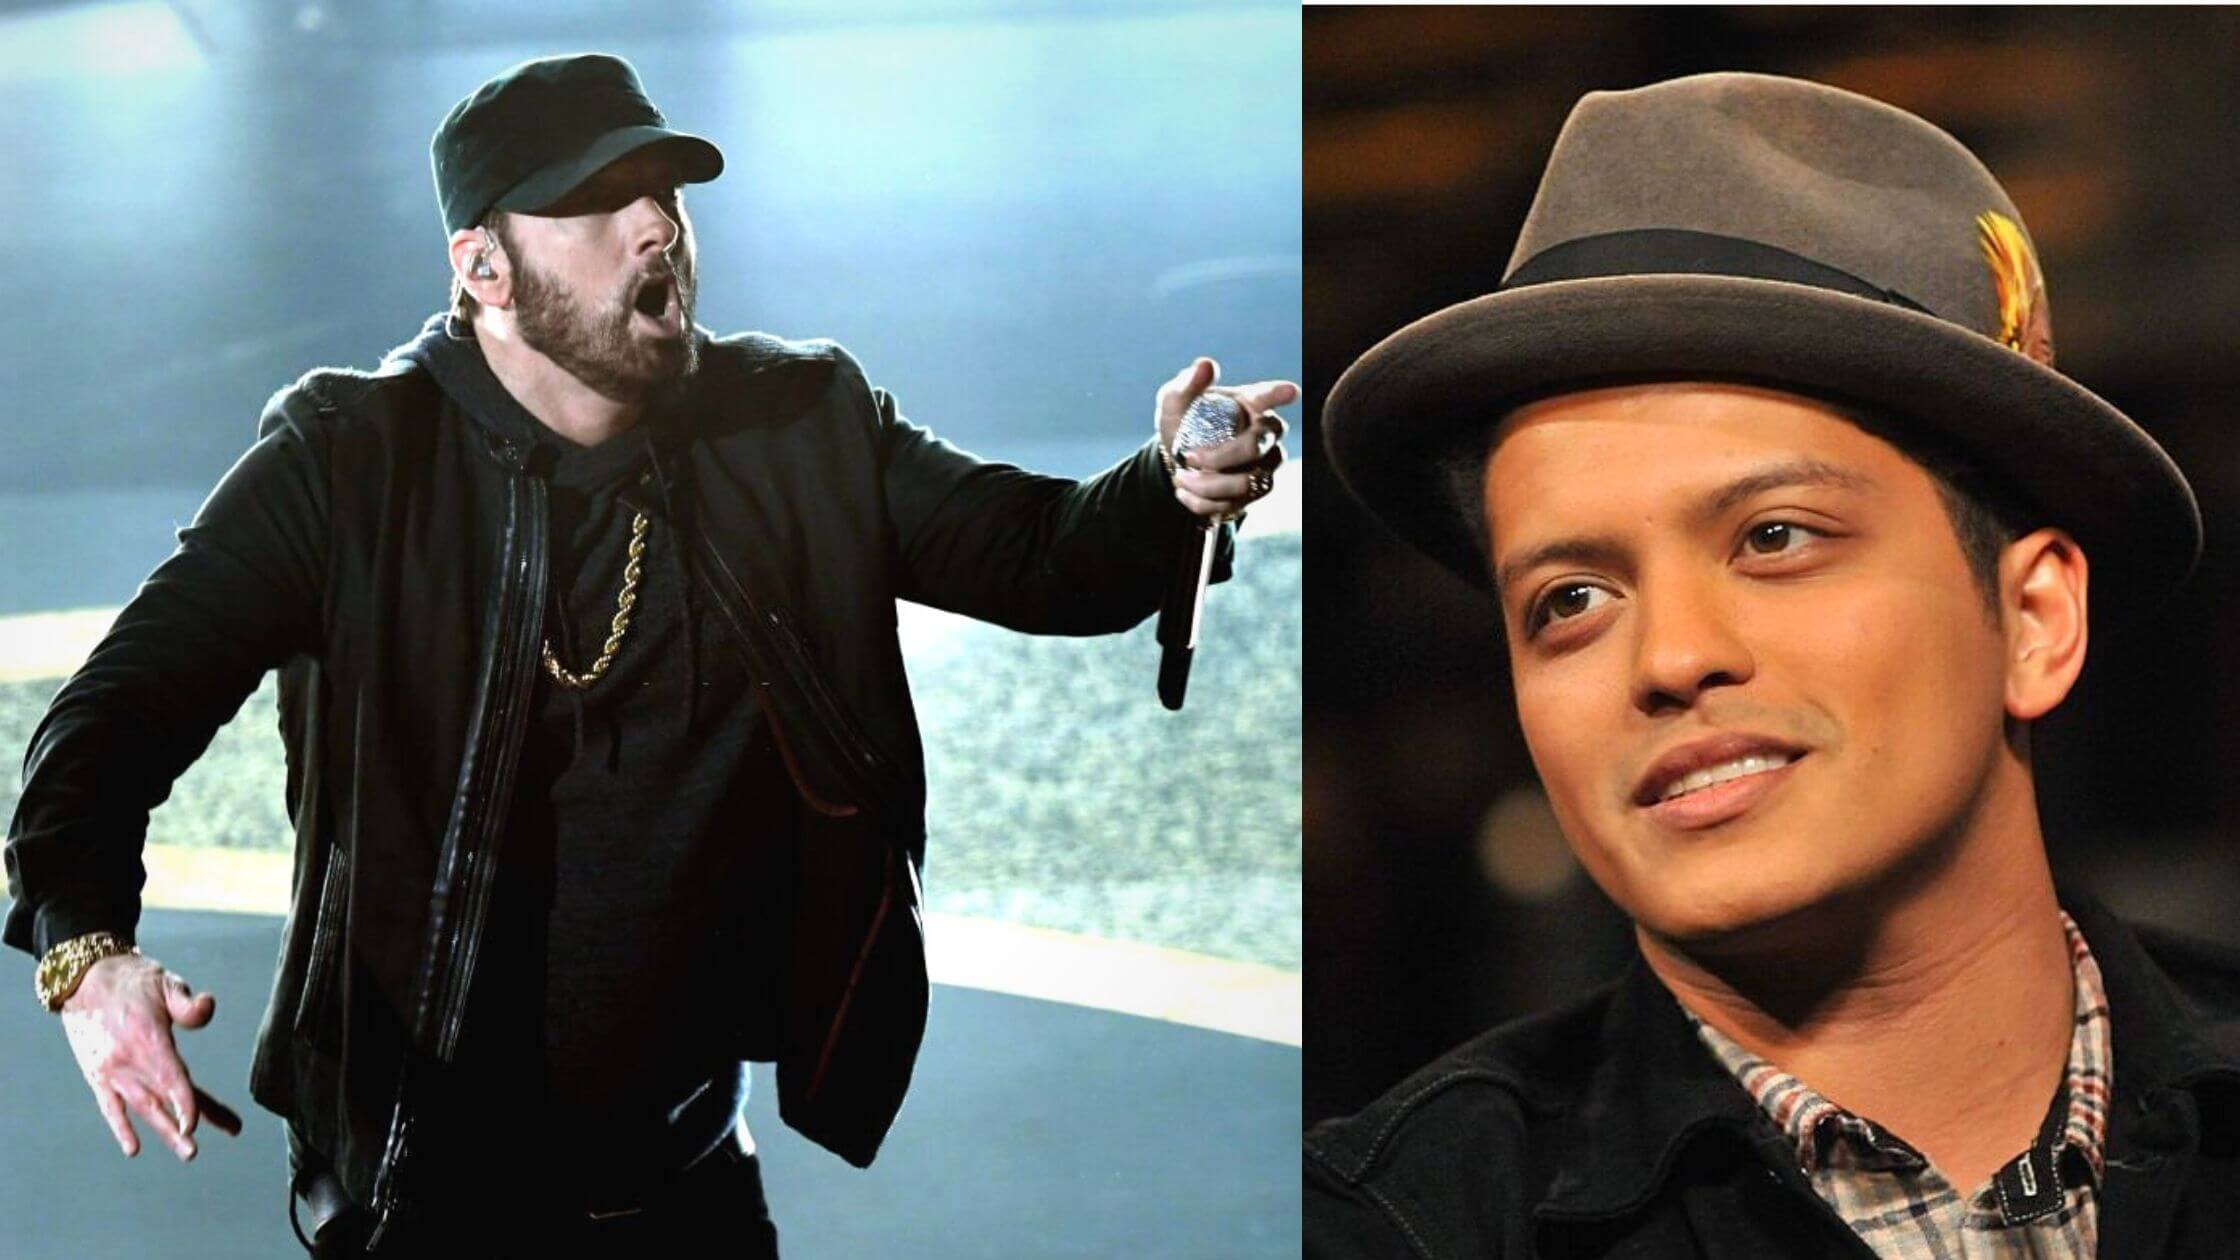 Look-How-Eminem-Surpassed-Bruno-Mars-Eminem-One-Of-The-10-Best-Artists-On-Spotify-1